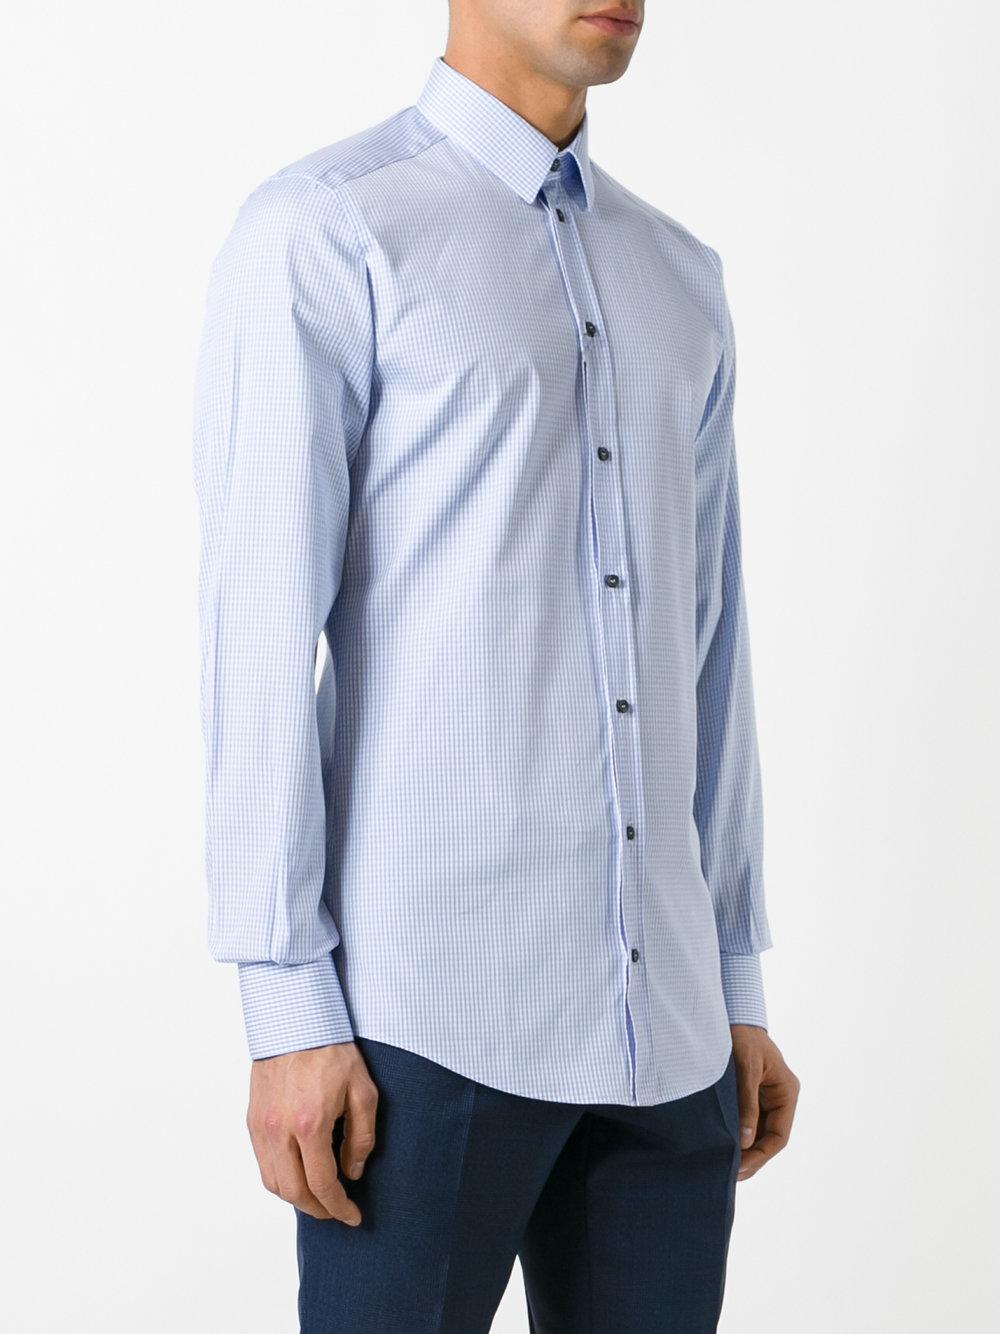 Lyst - Dolce & Gabbana Button-up Shirt in Blue for Men